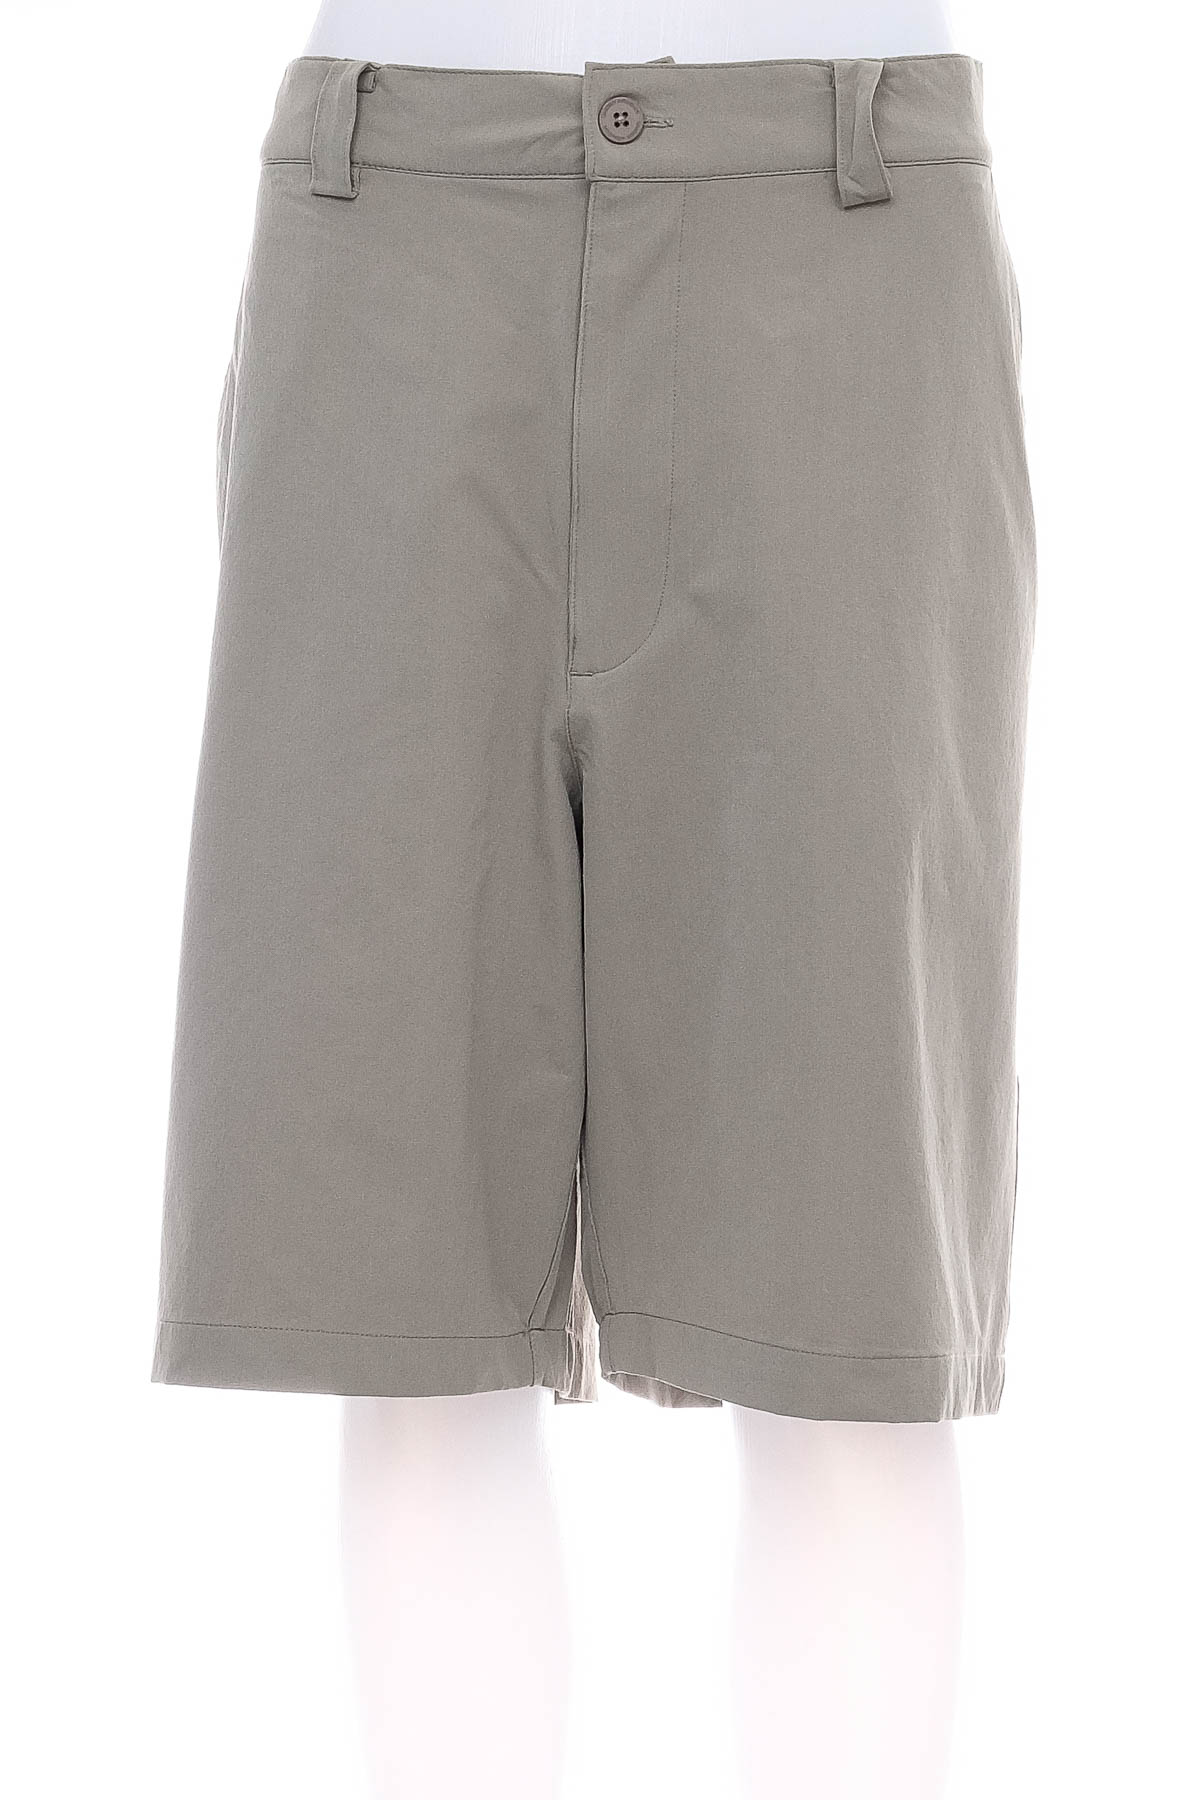 Men's shorts - UNDER ARMOUR - 0